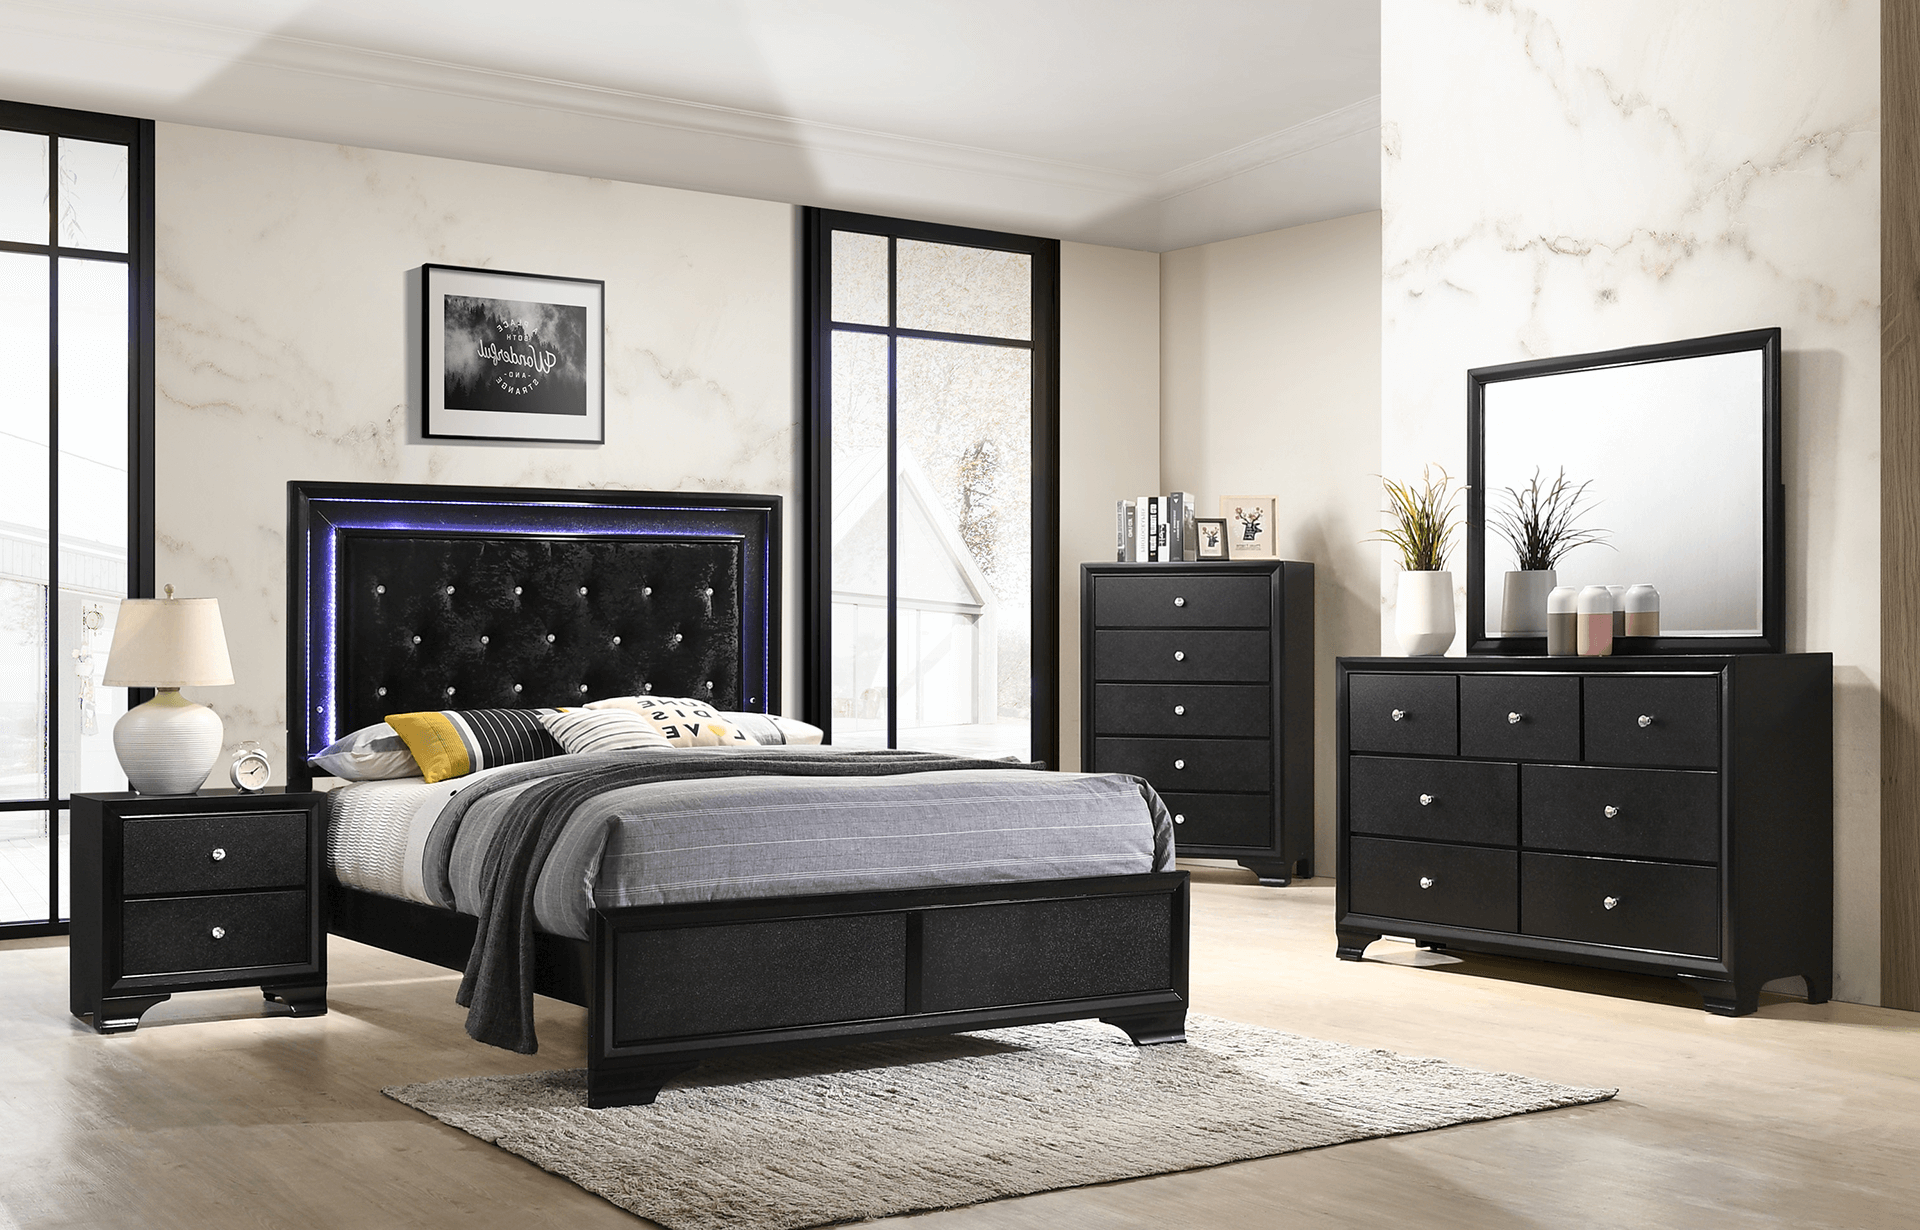 Atlantic_Furniture-Bedrooms-B4350-hi-res